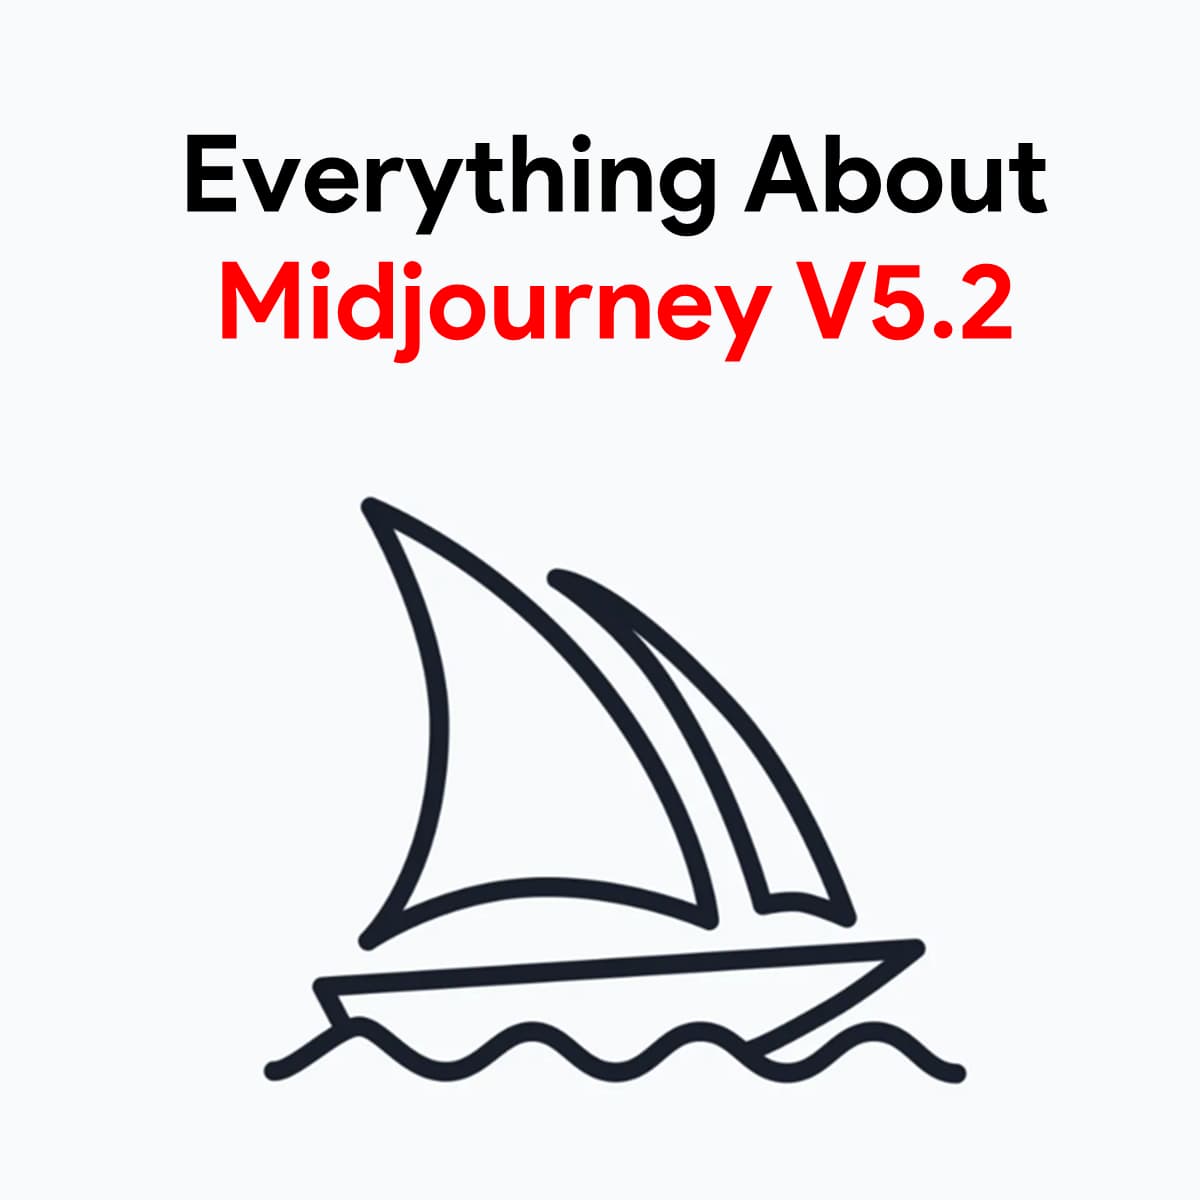 What's New In Midjourney V5.2